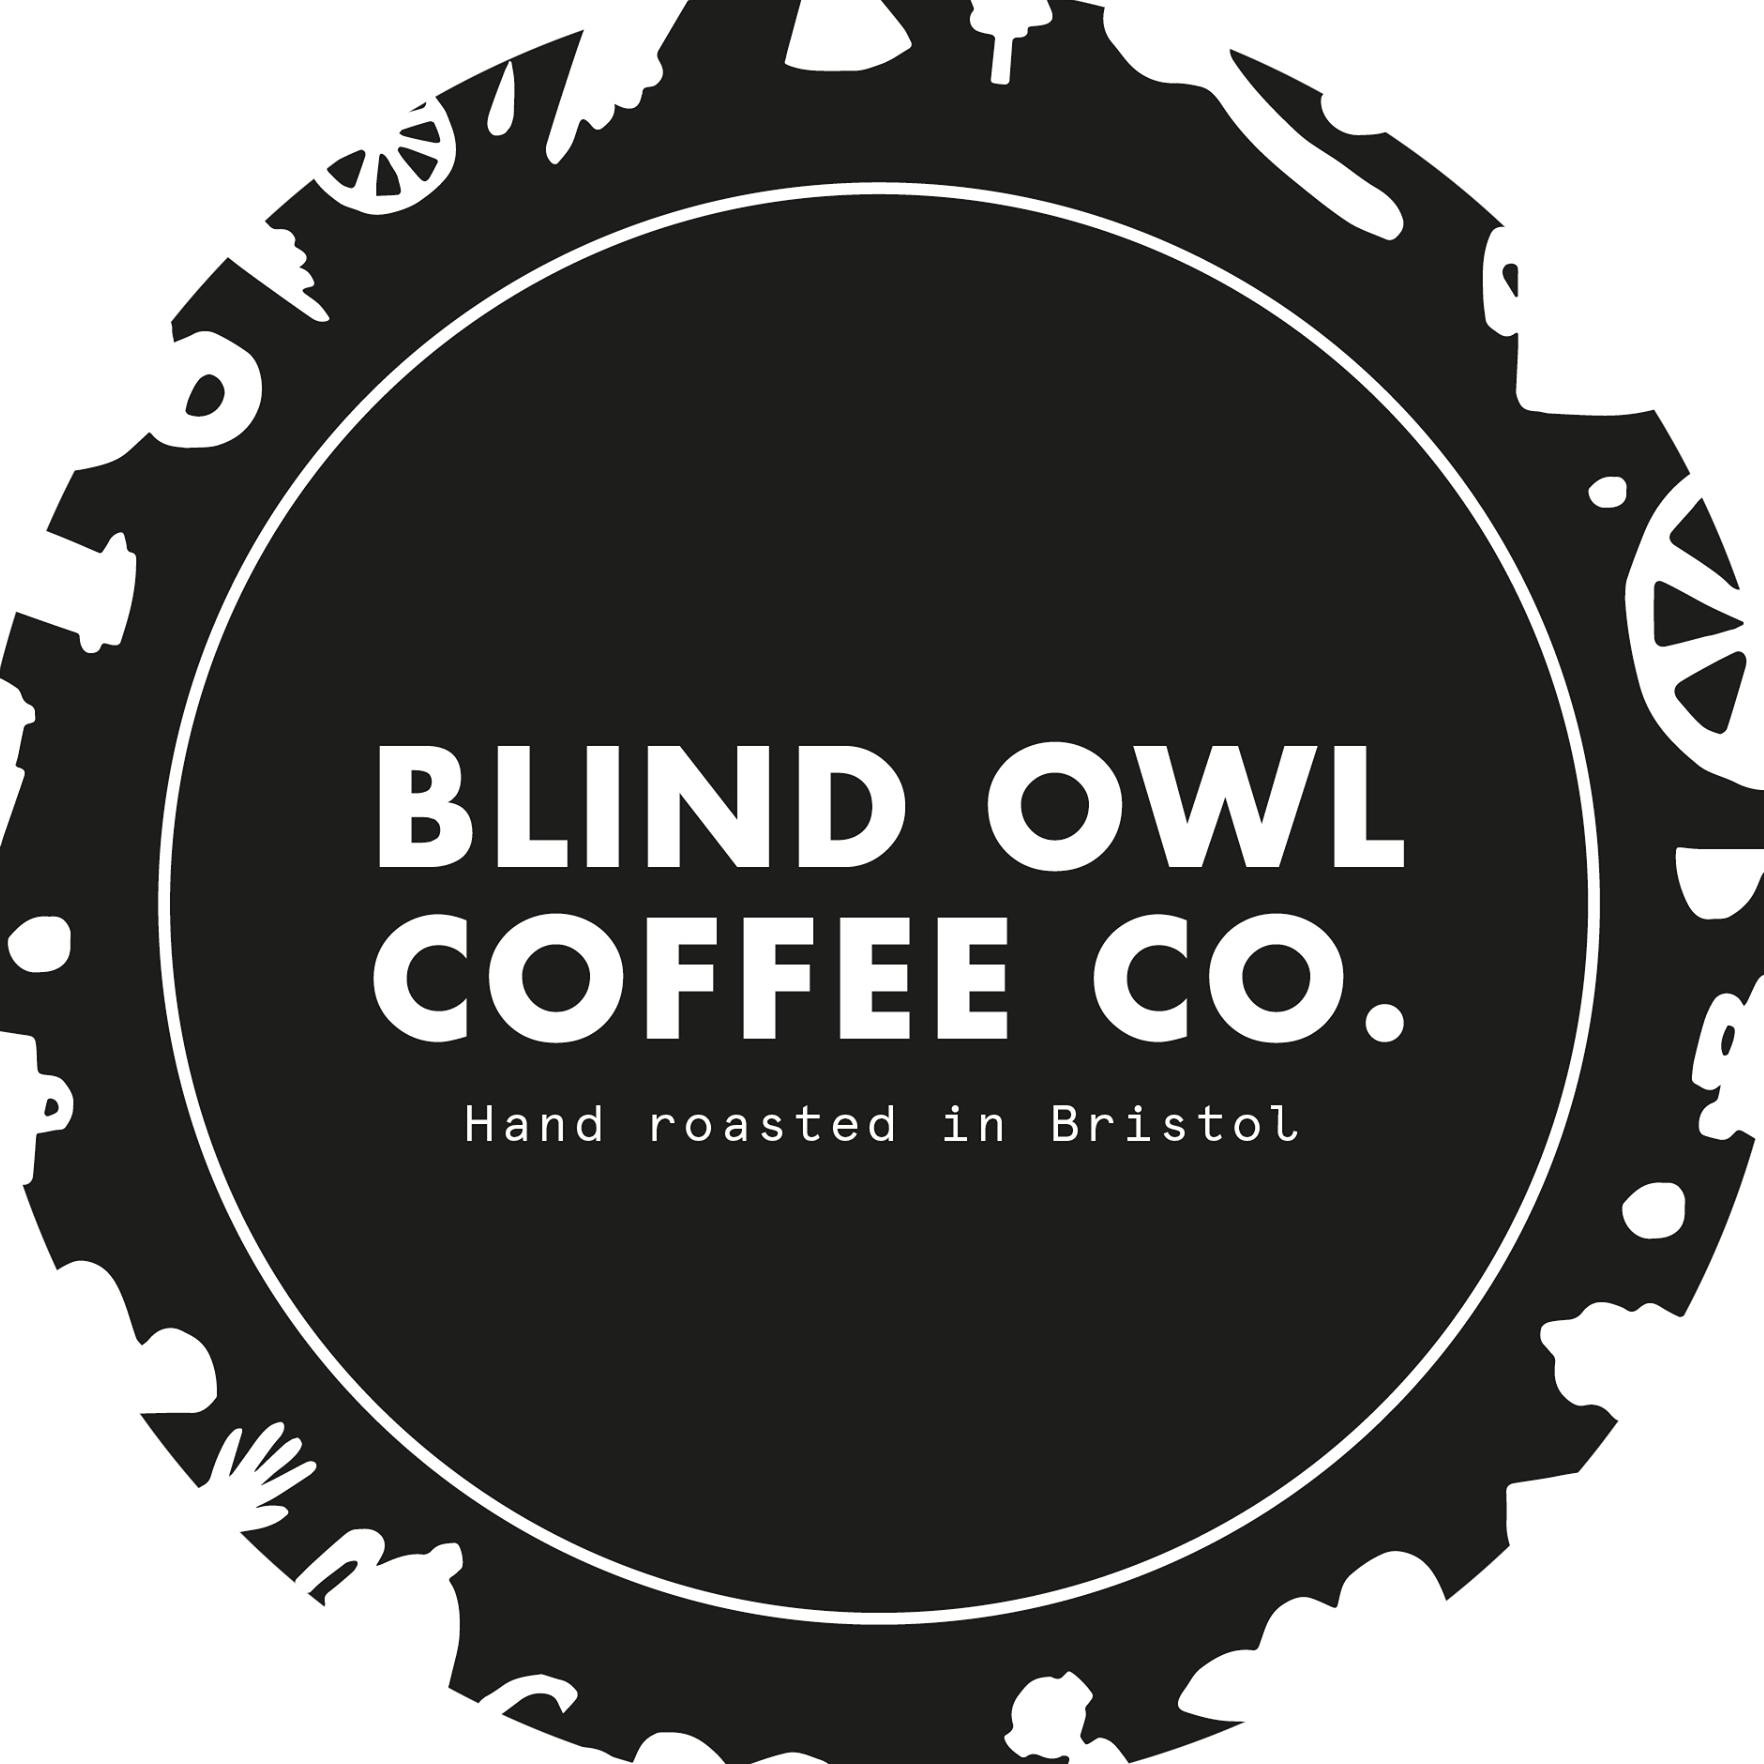 Blind Owl Coffee Co. brand logo